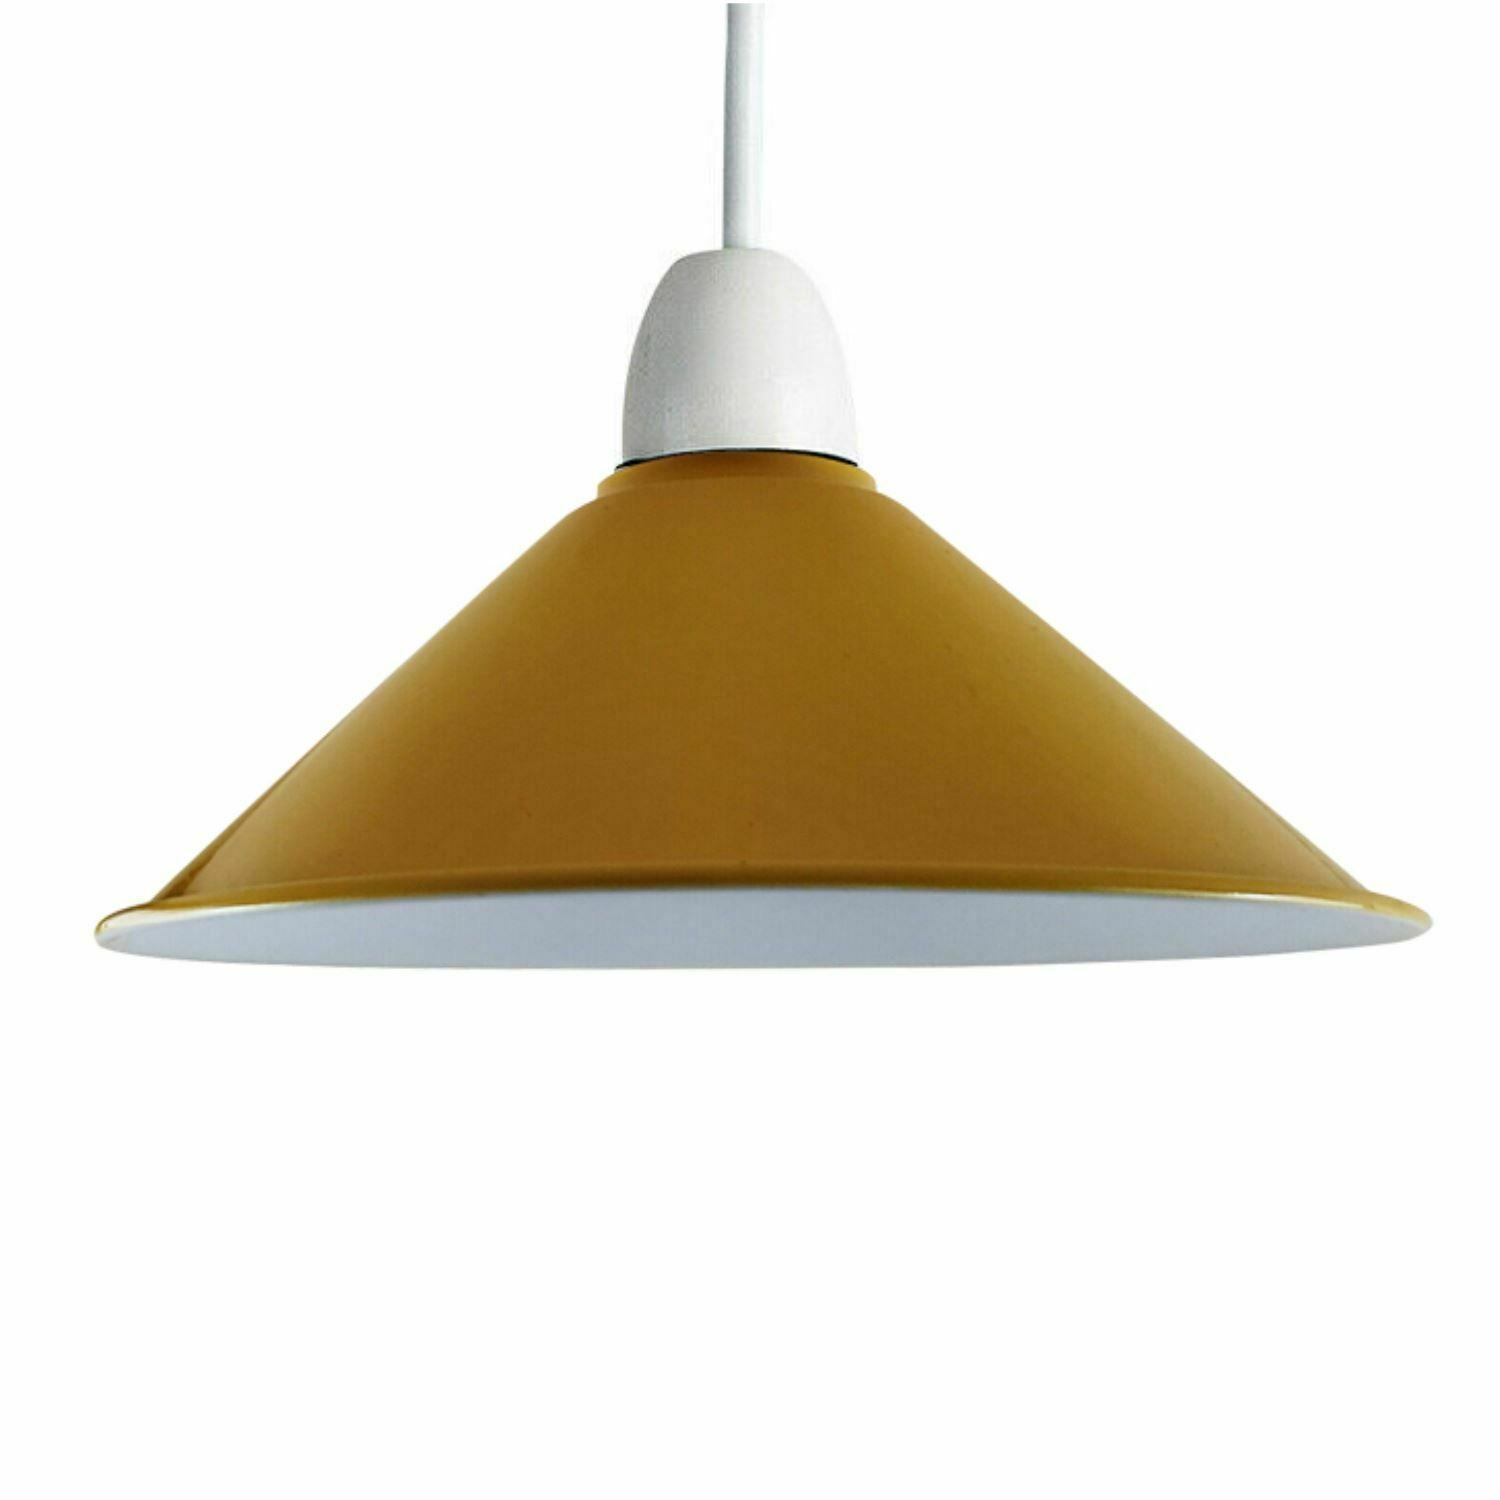 Yellow Cone Pendant Lamp Shade.JPG